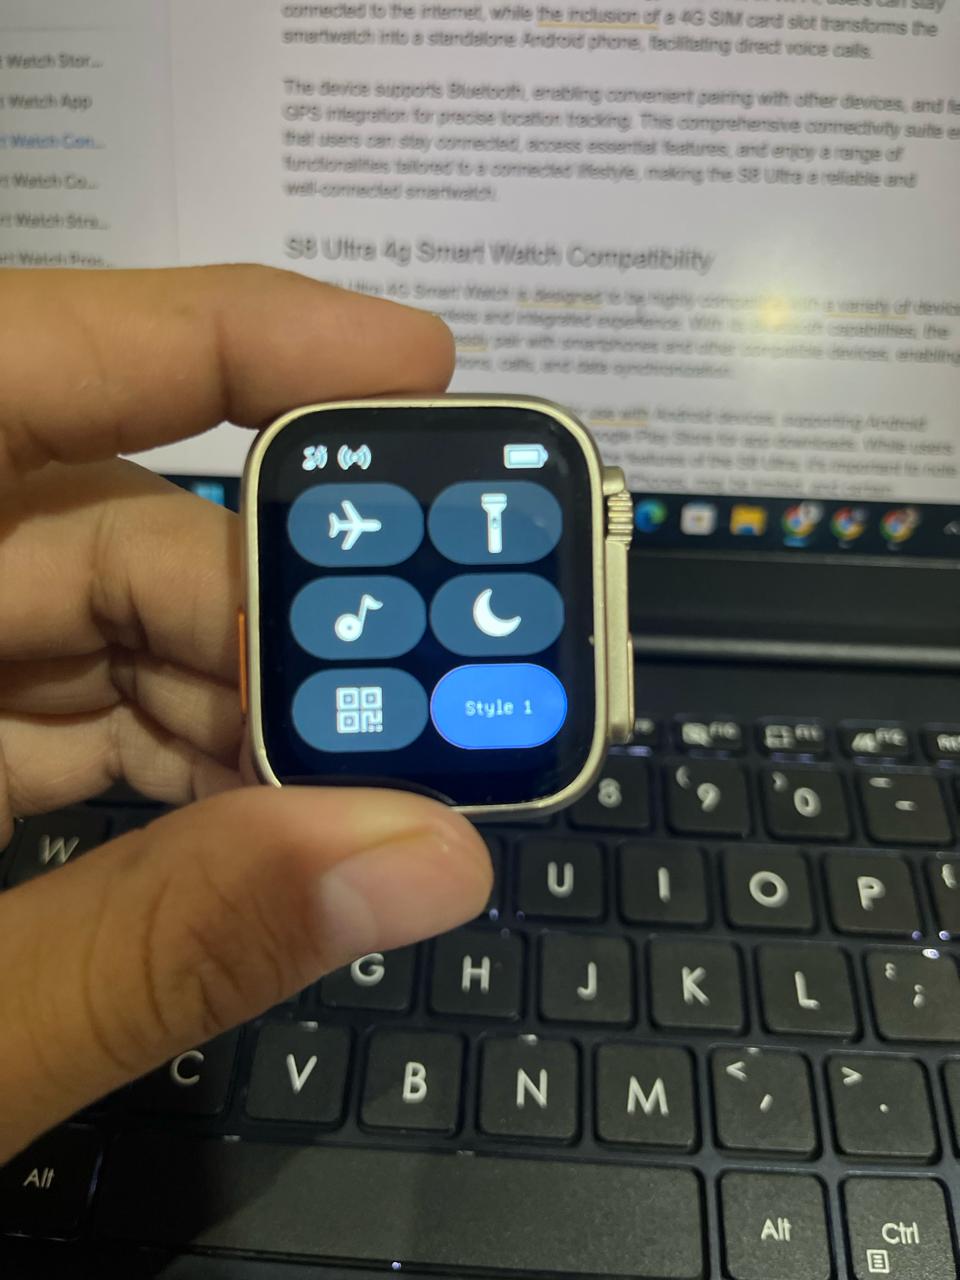 S8 Ultra 4g Smart Watch Connectivity